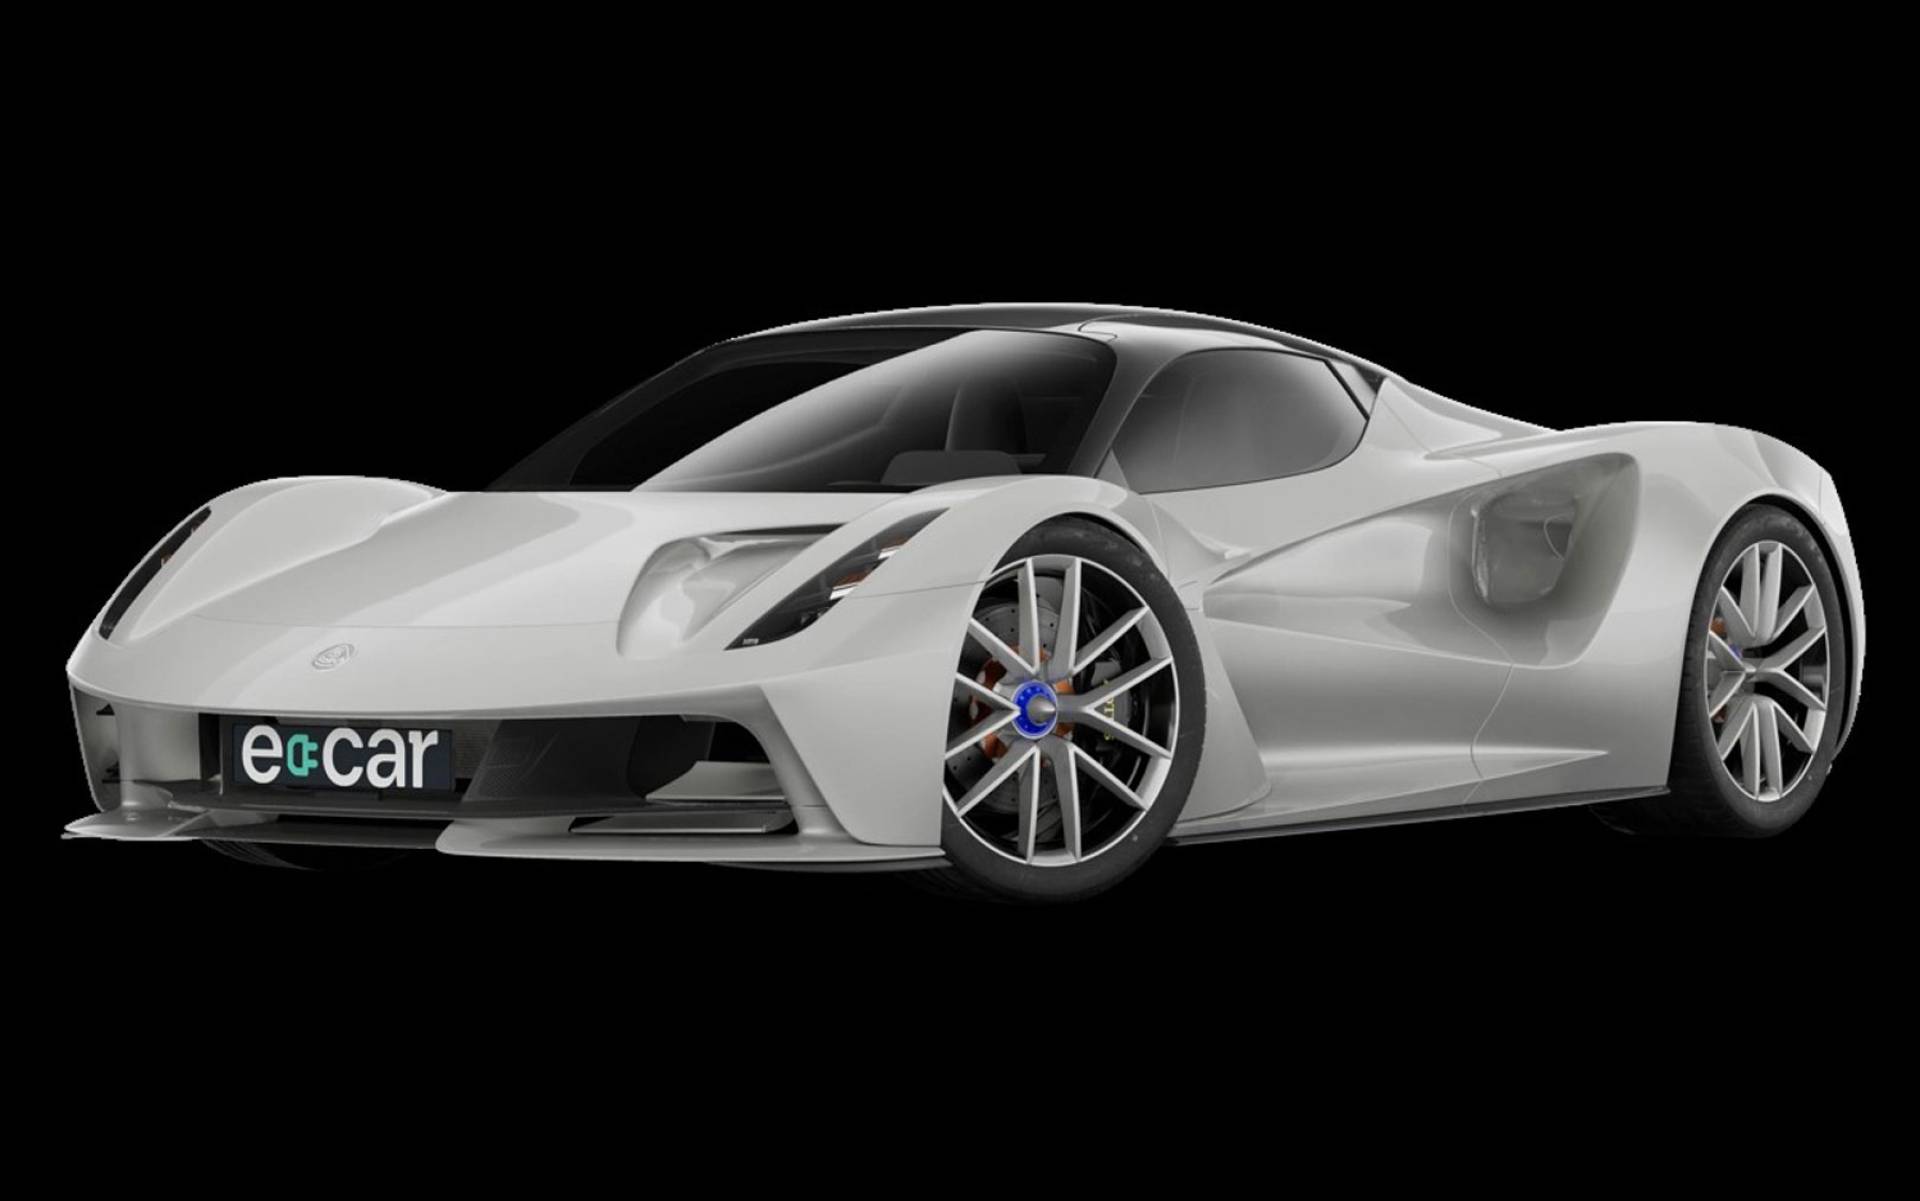 The new Lotus Evija hypercar goes live on e-car